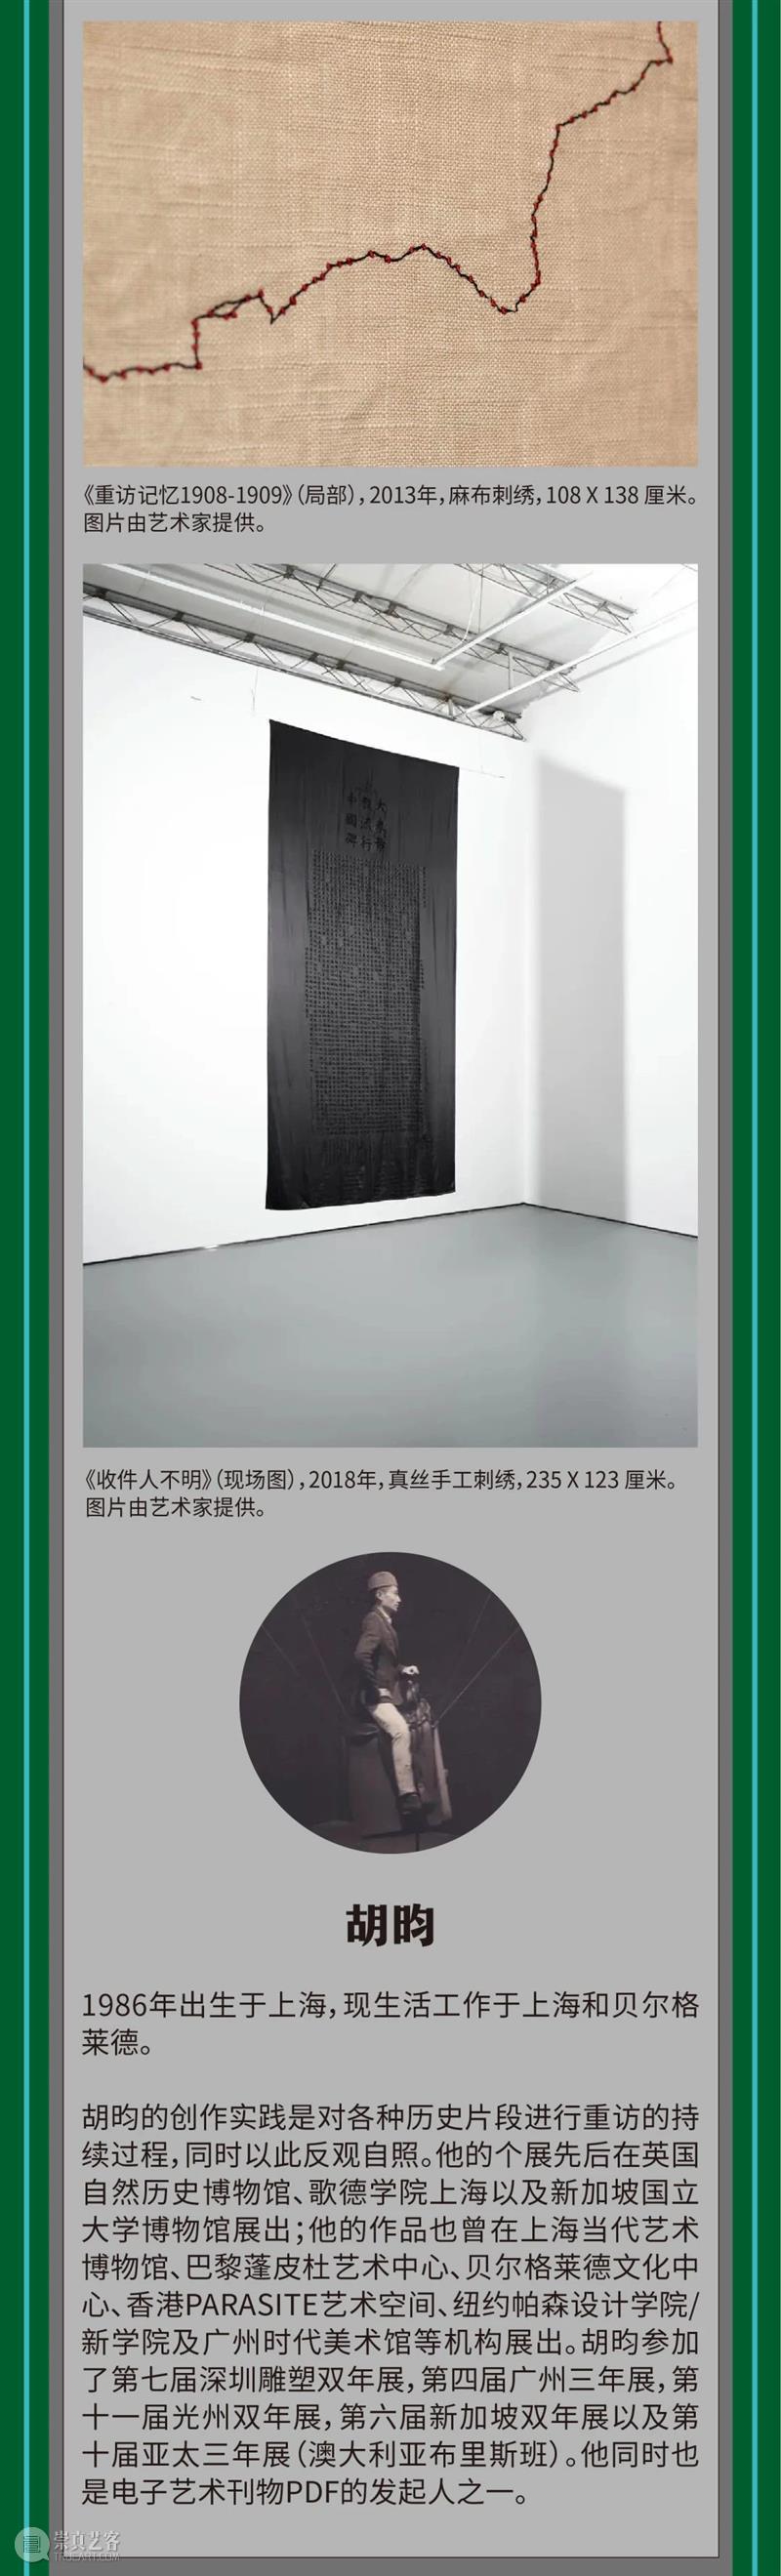 RAM 2024年度项目计划出炉！  上海外滩美术馆RAM 崇真艺客